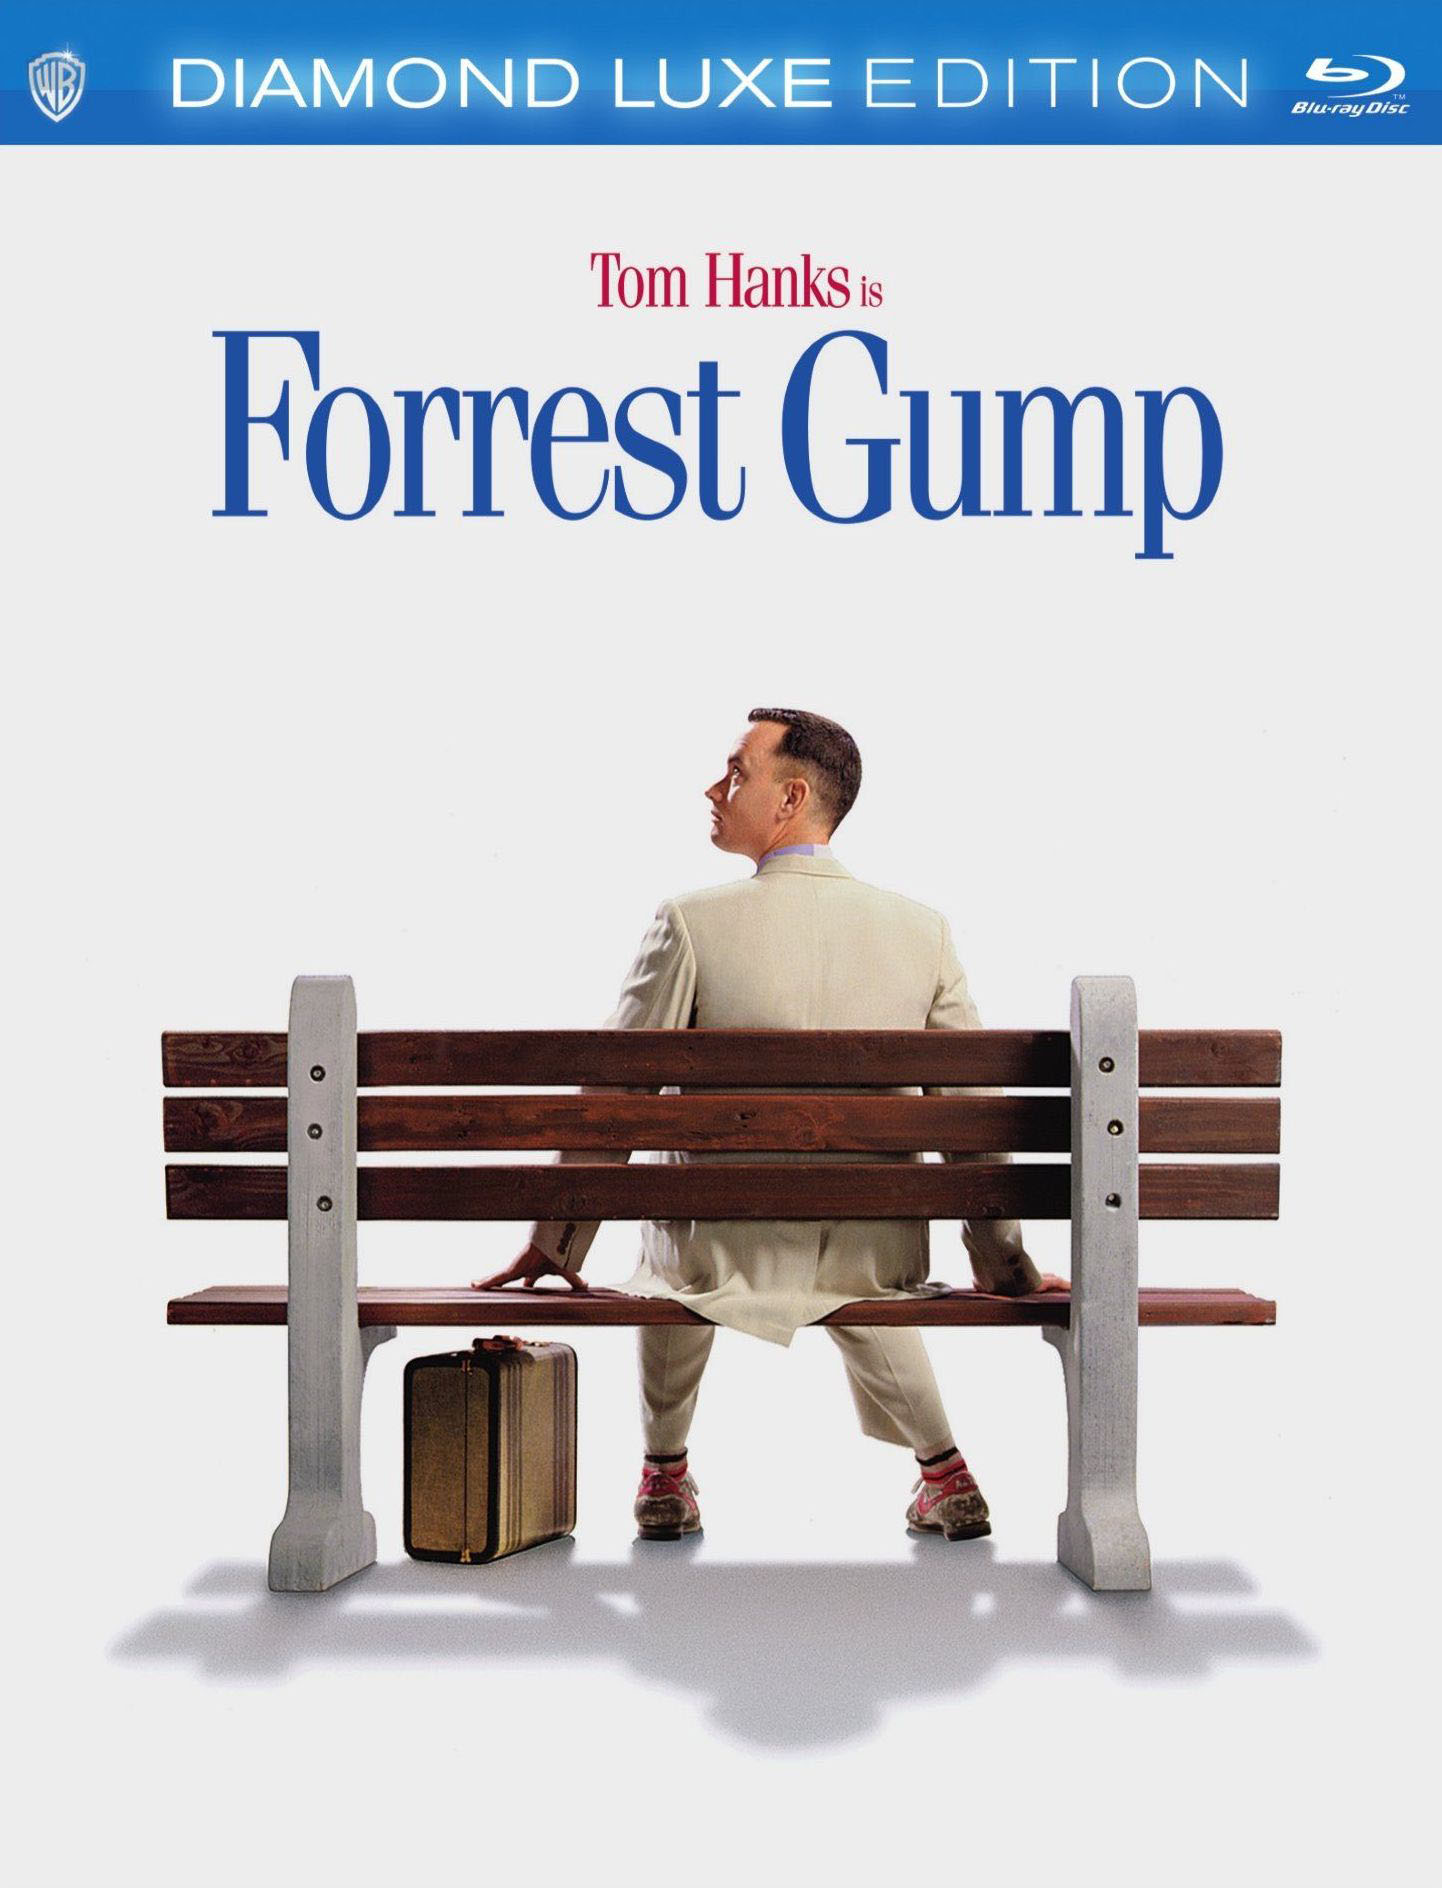 Forrest Gump [20th Anniversary] [Blu-ray] [1994] - Best Buy